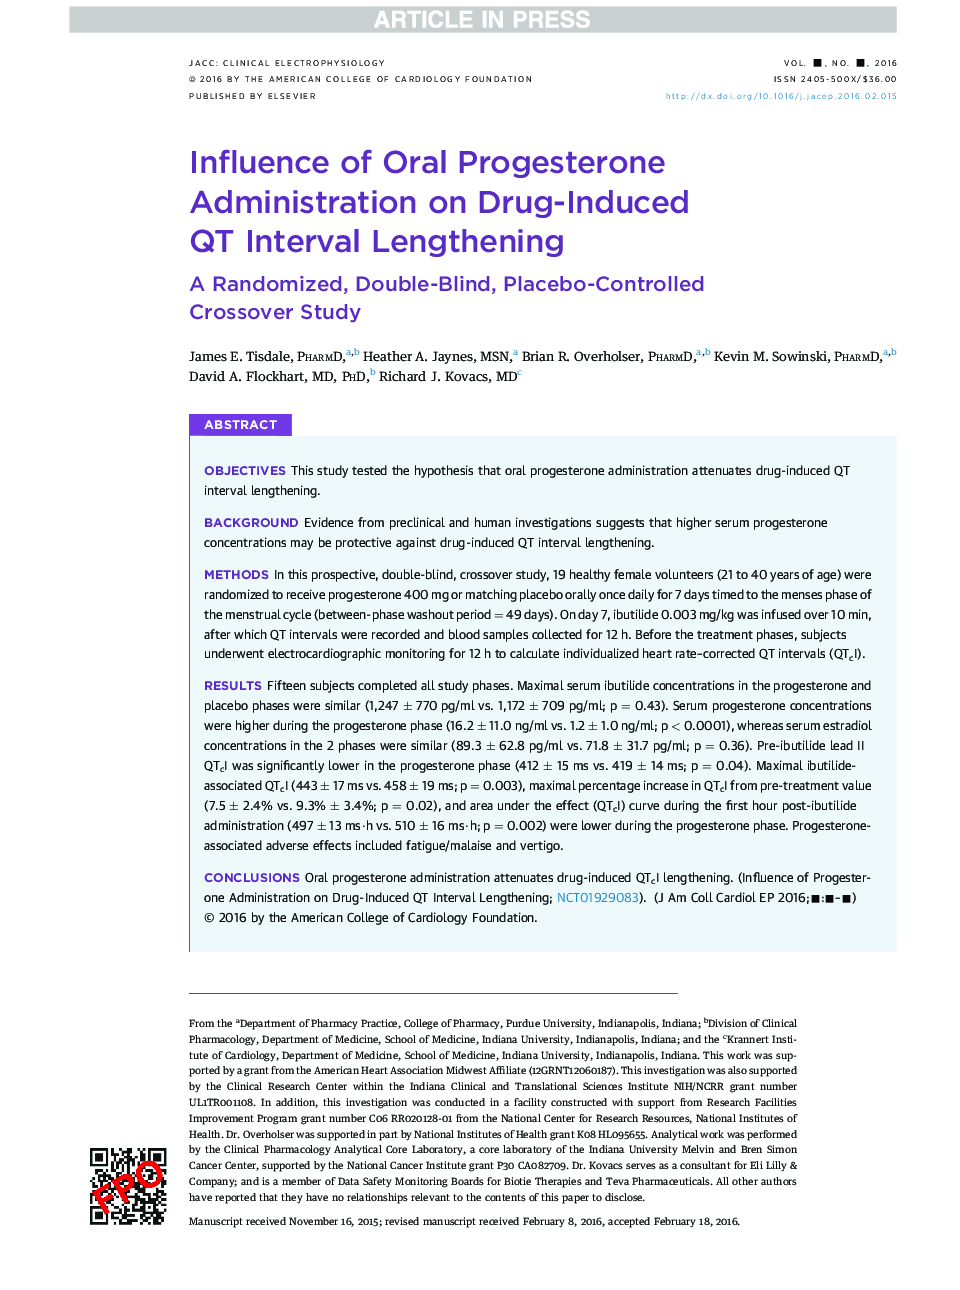 Influence of Oral Progesterone Administration on Drug-Induced QTÂ Interval Lengthening